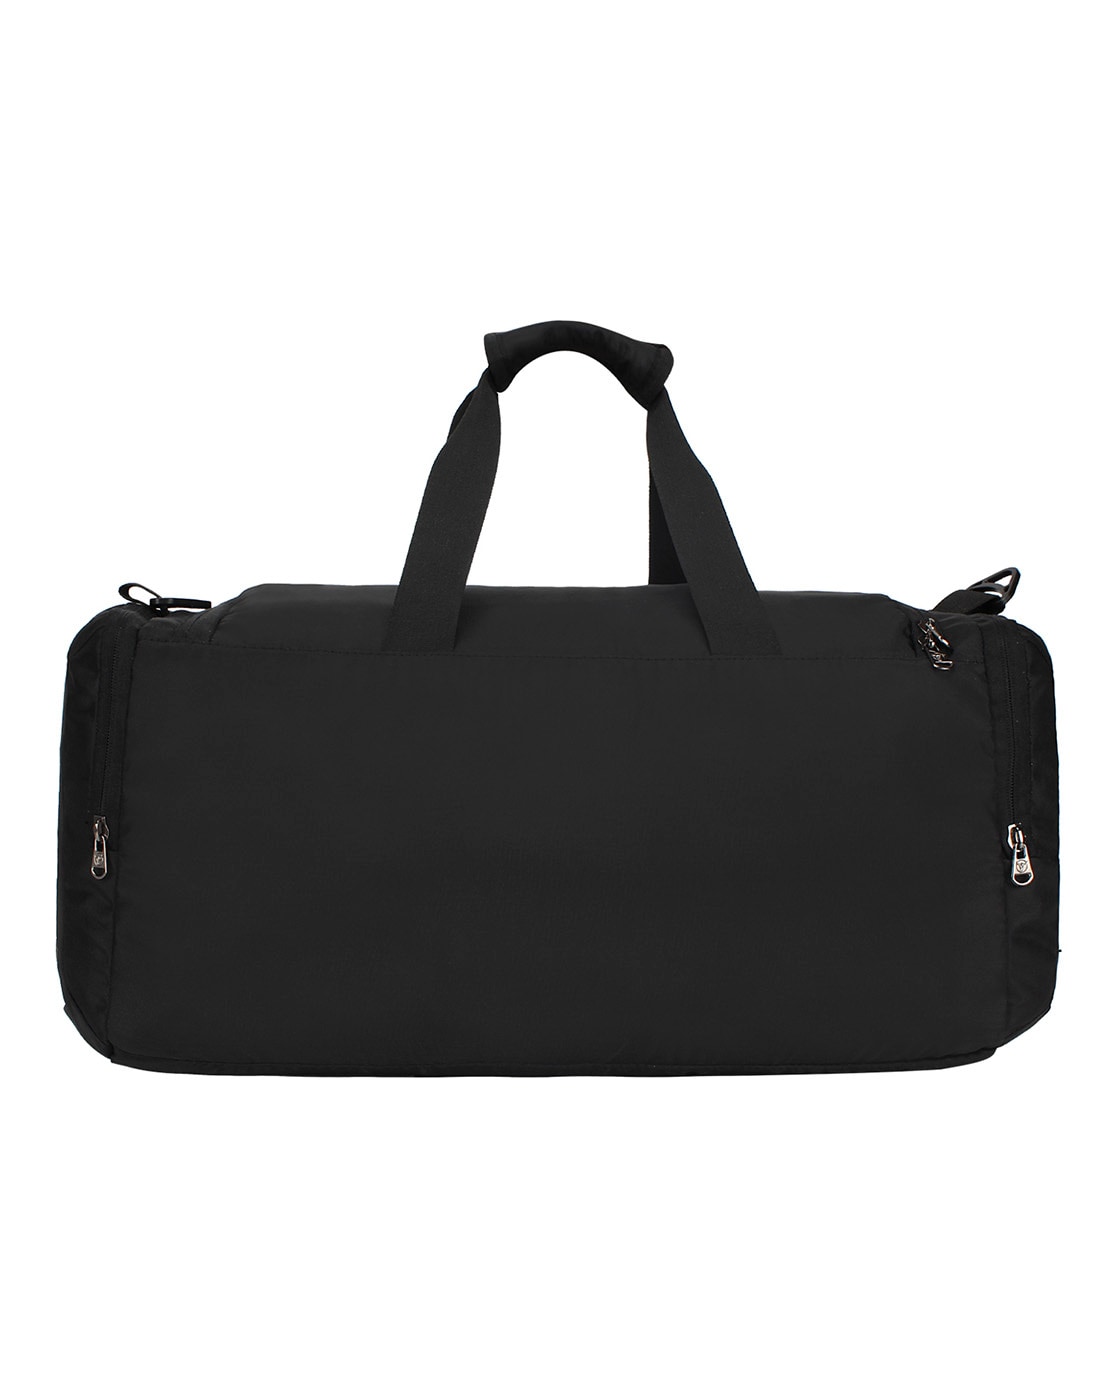 Buy Grey Travel Bags for Men by Bagsrus Online  Ajiocom